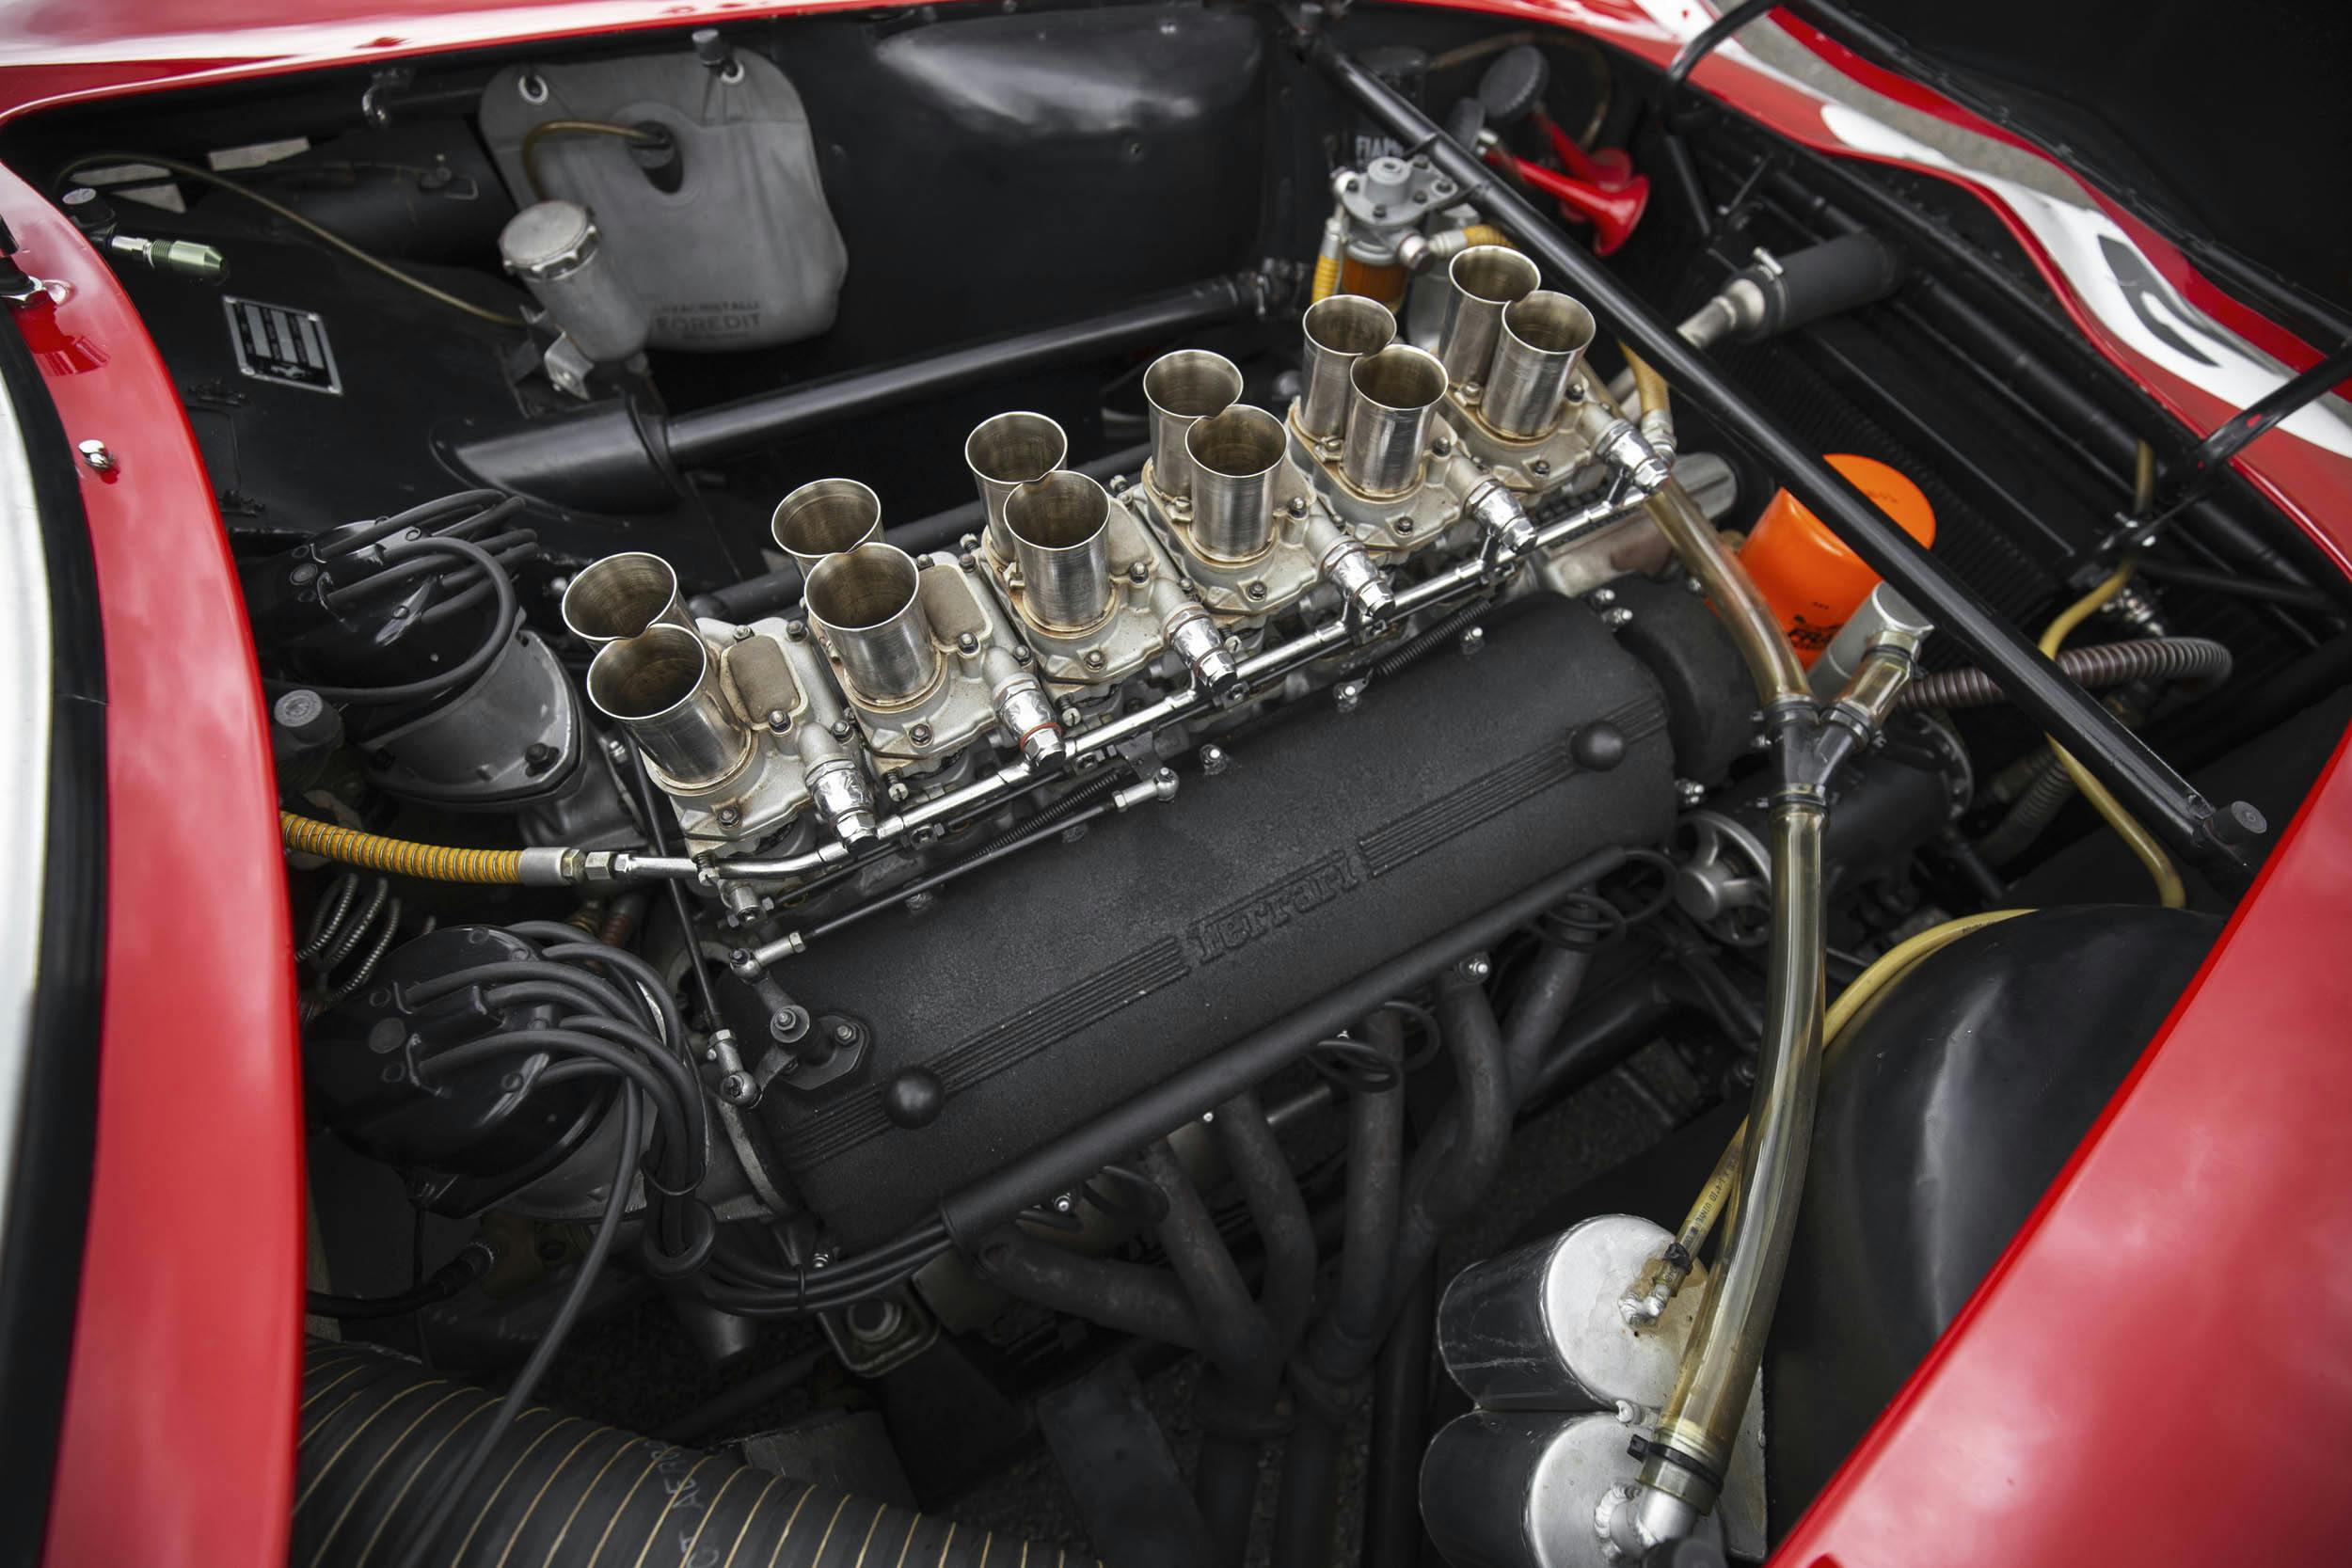 Ferrari-GTO engine